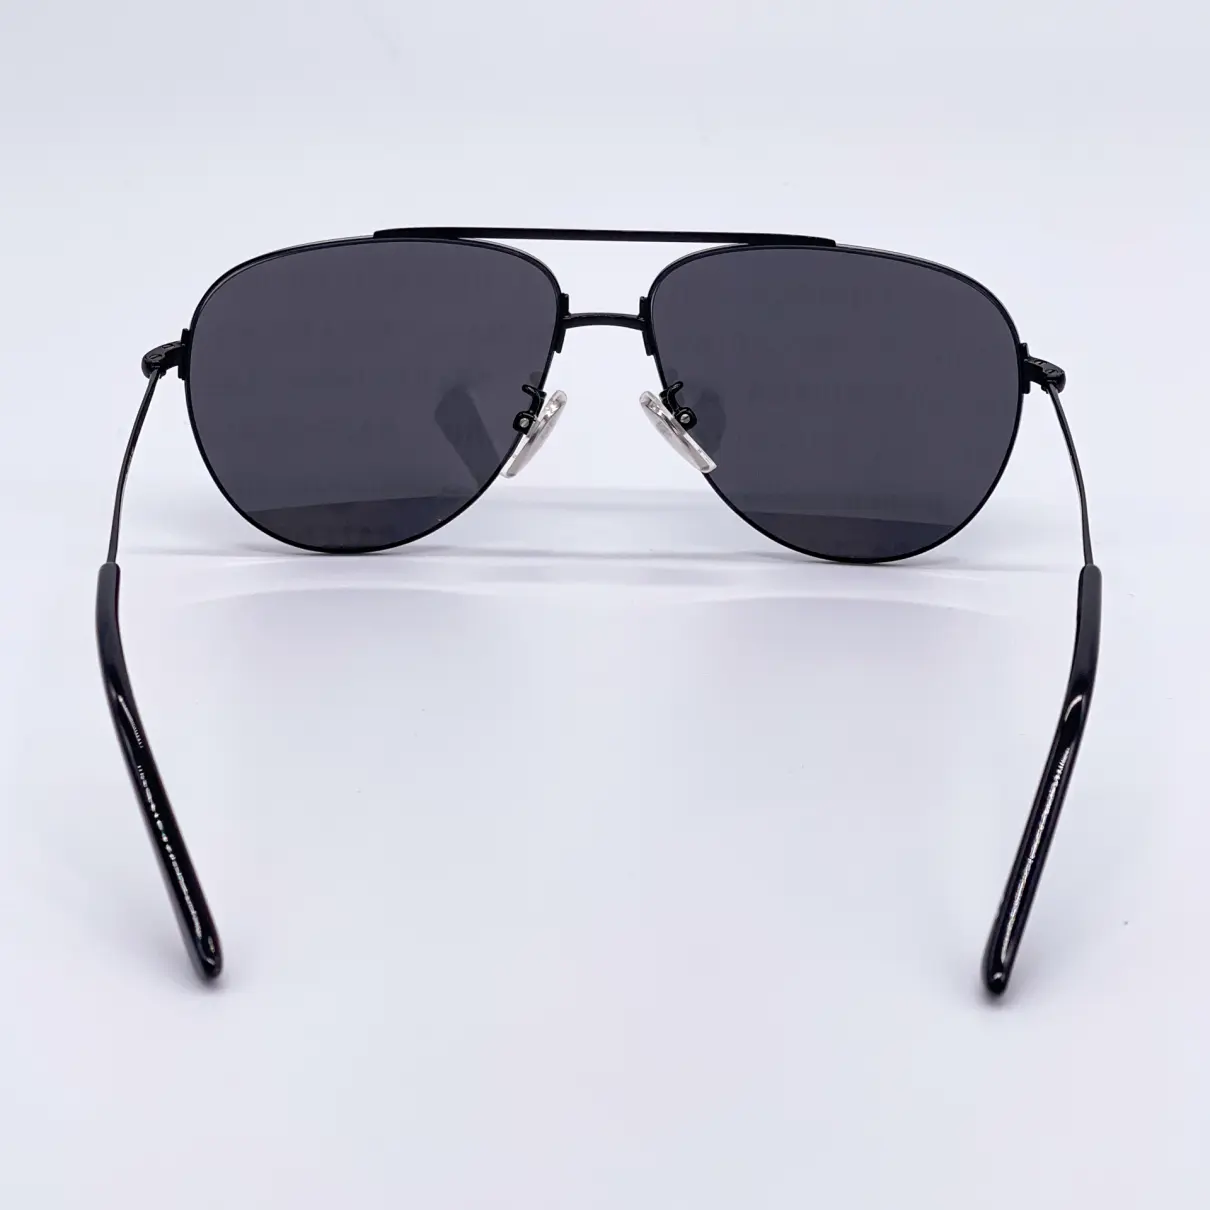 Buy Balenciaga Aviator sunglasses online